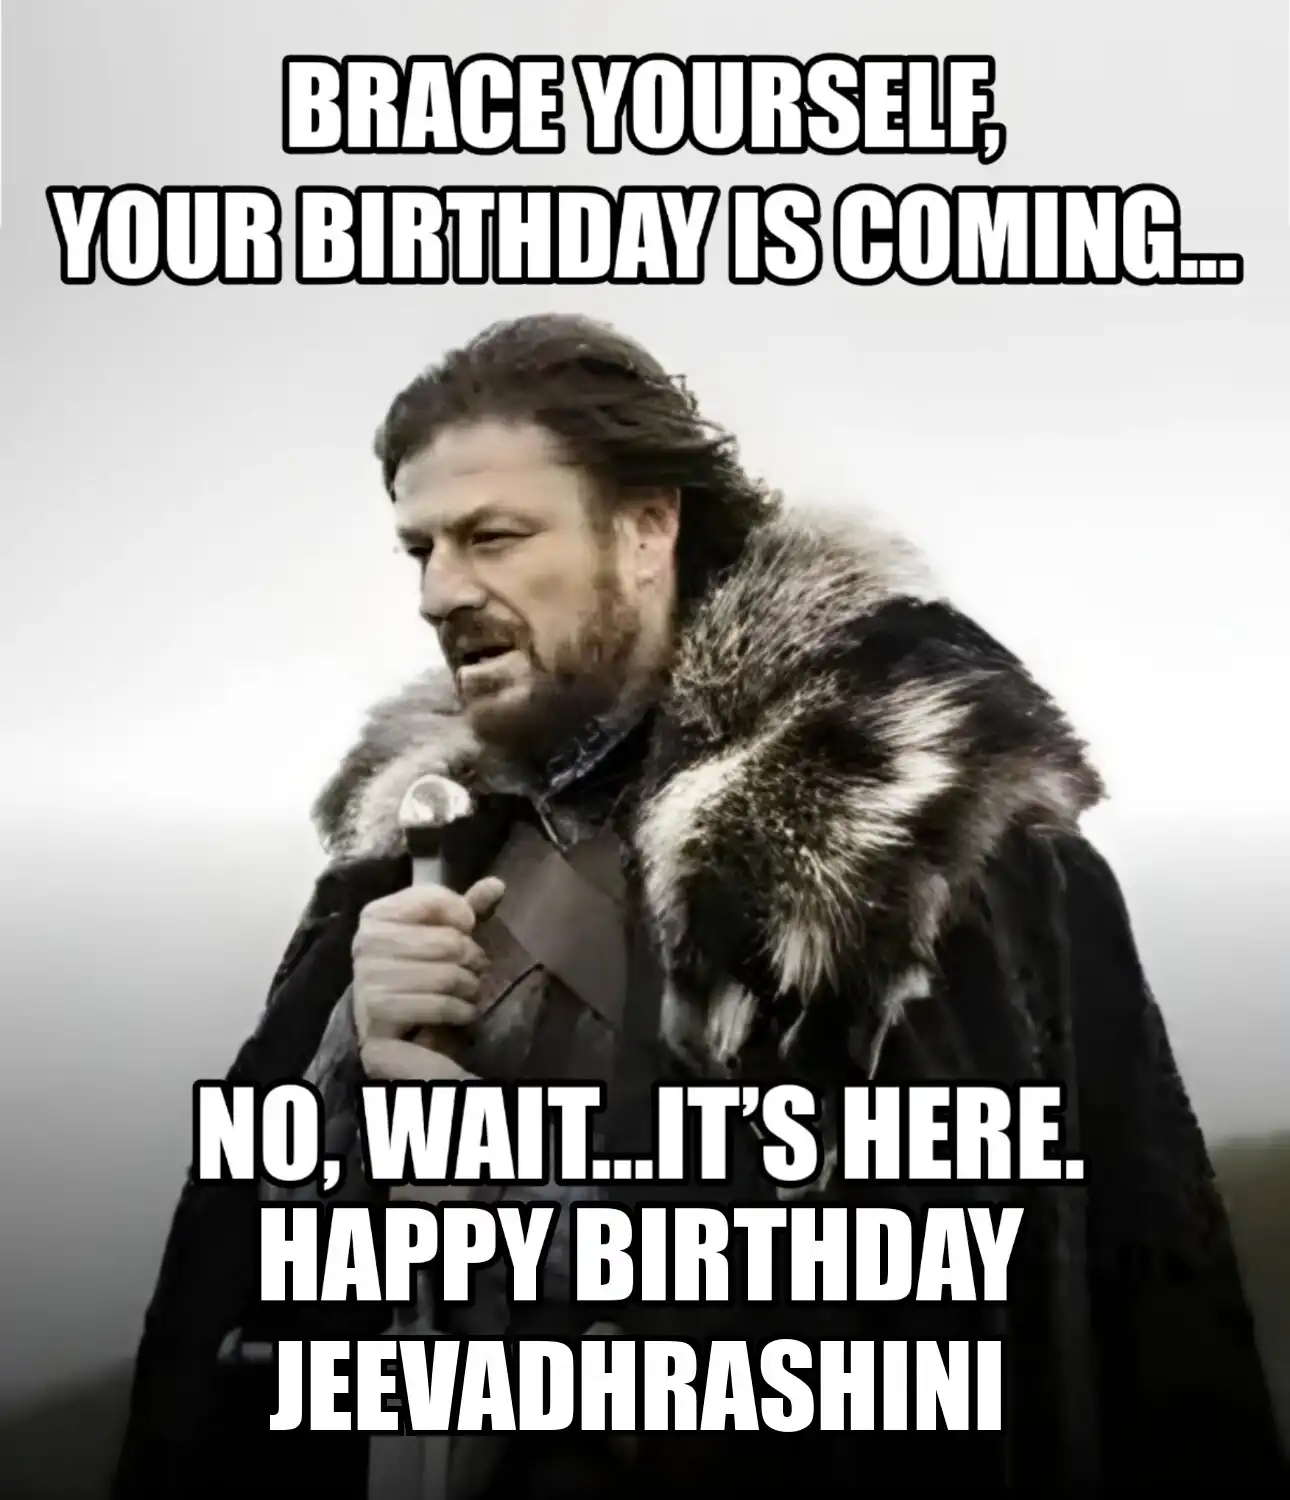 Happy Birthday Jeevadhrashini Brace Yourself Your Birthday Is Coming Meme